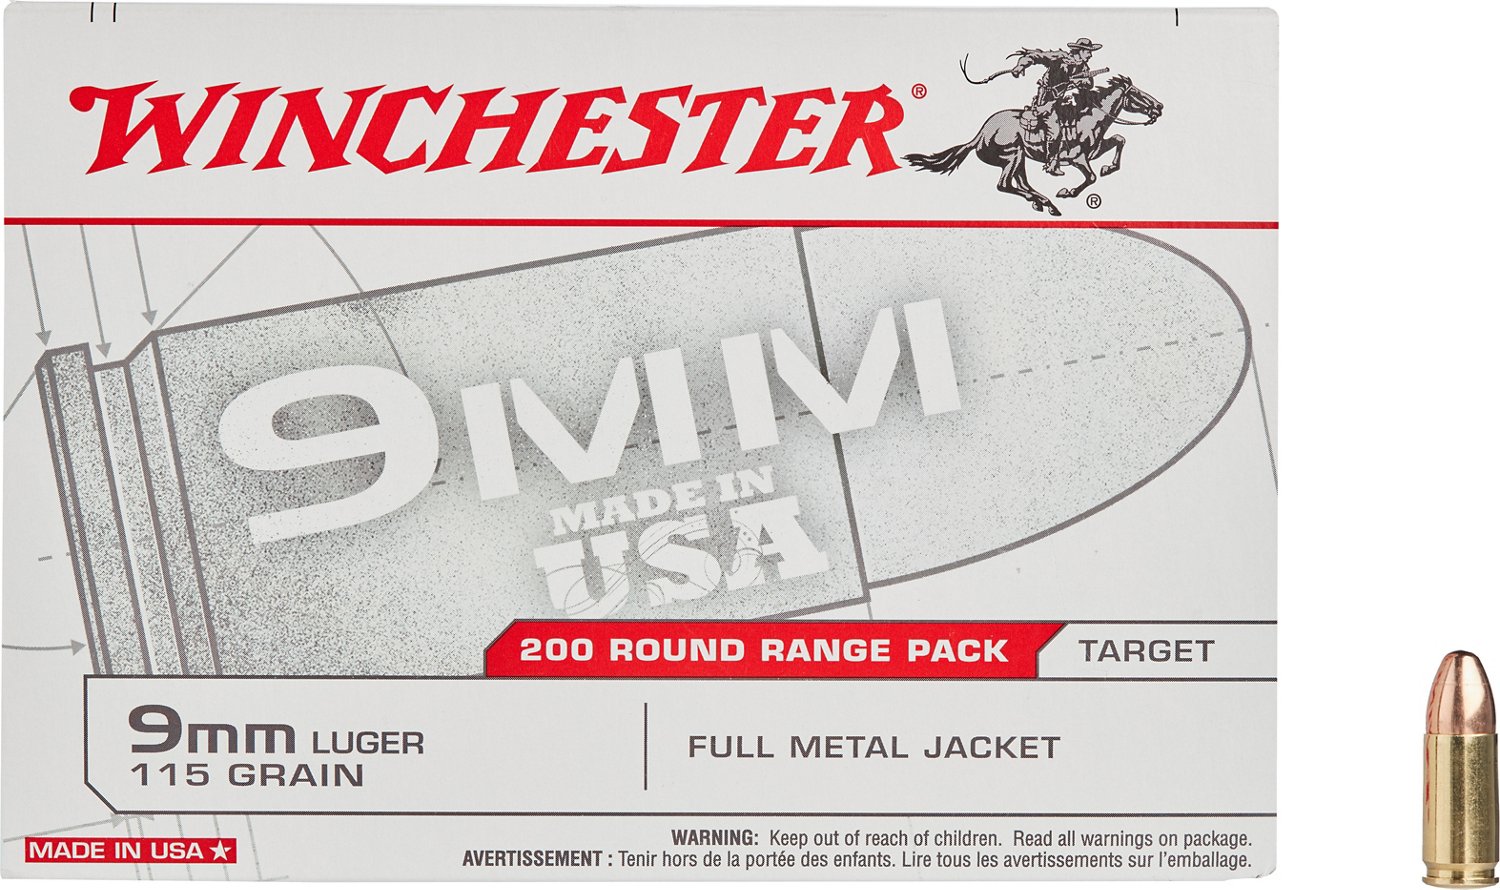 Winchester 9mm 115-Grain FMJ Centerfire Pistol Ammunition - 200 Rounds                                                           - view number 2